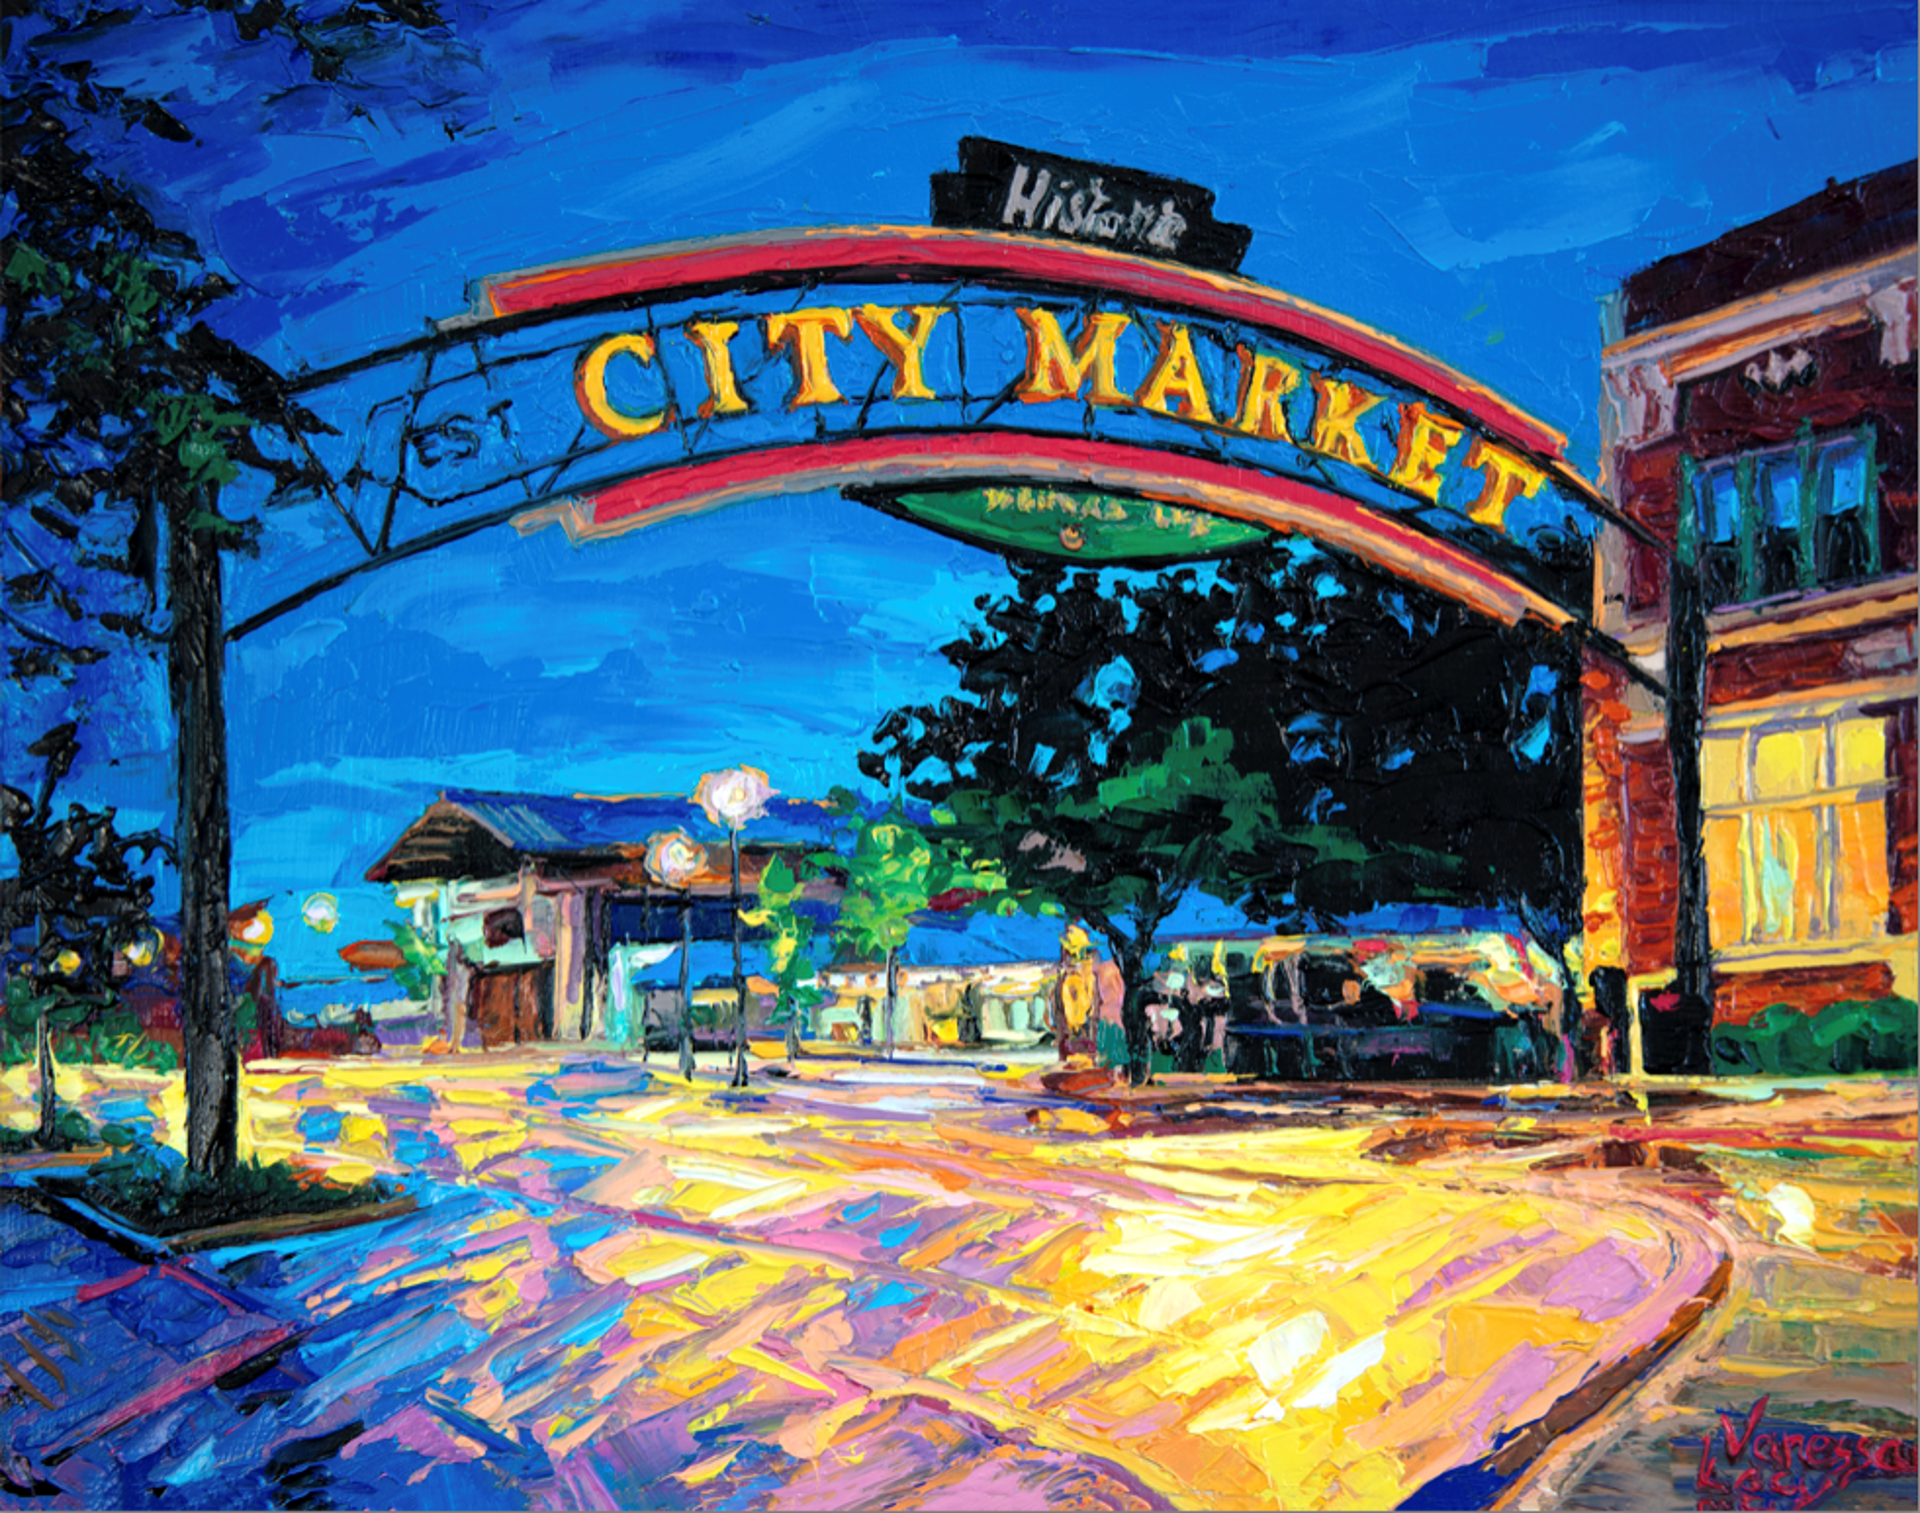 City Market by Vanessa Lacy